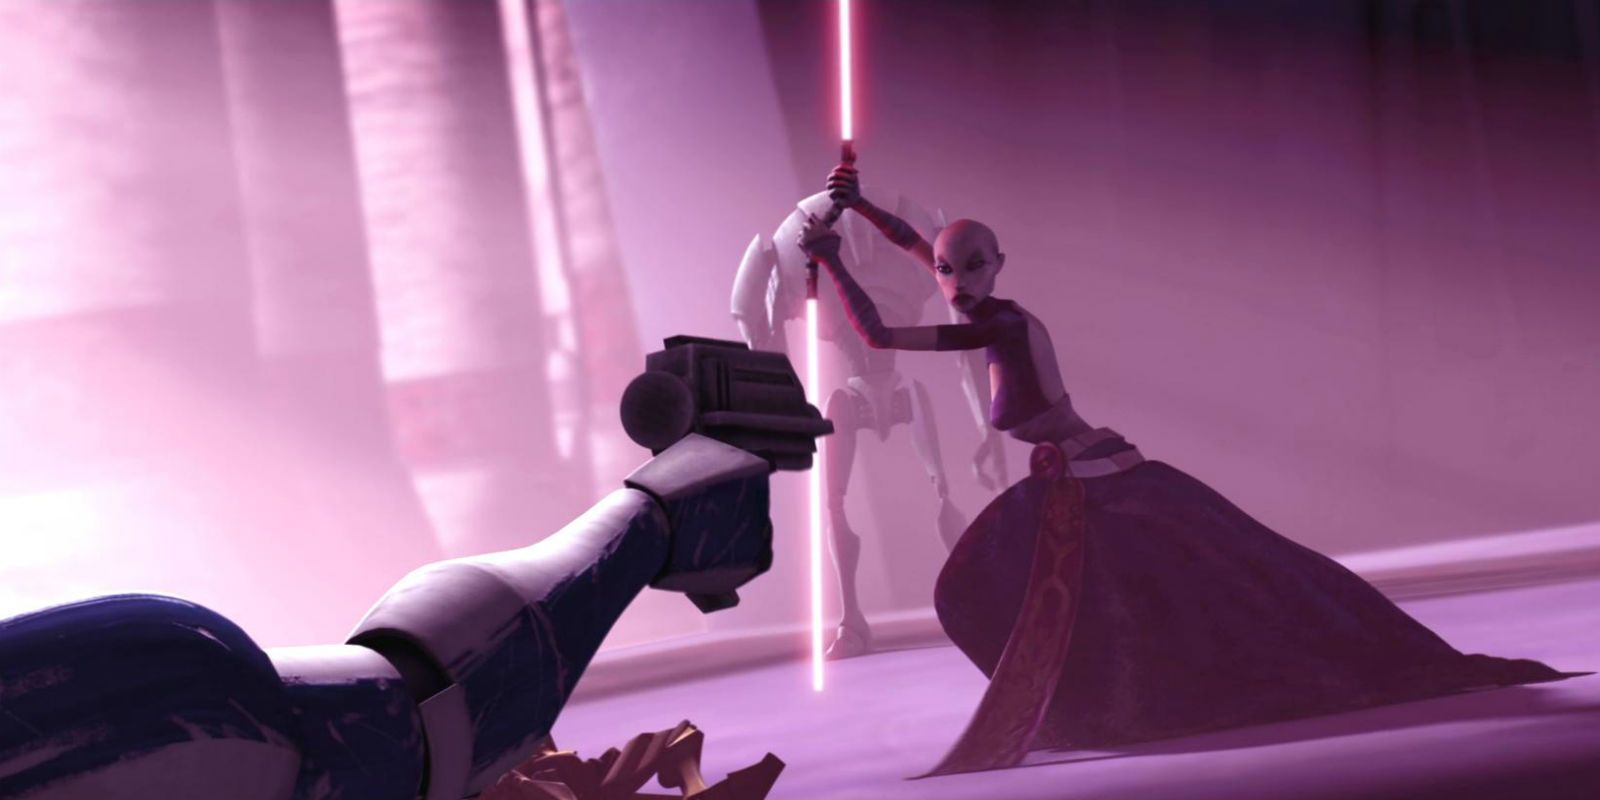 Asajj Ventress Fights a Clone Trooper in Star Wars The Clone Wars